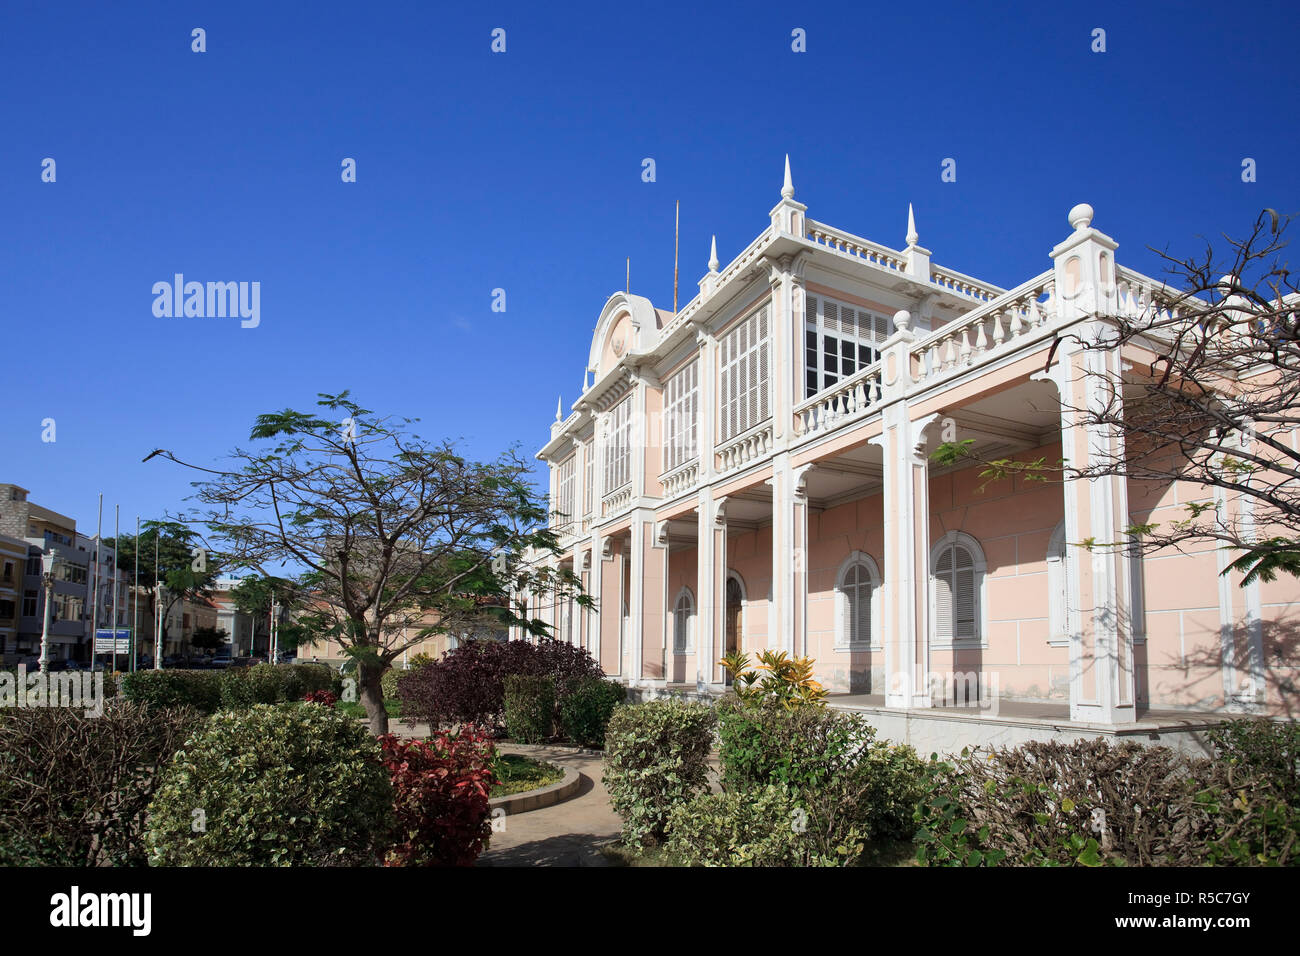 Kap Verde, Sao Vicente, Mindelo, koloniale Architektur Stockfoto